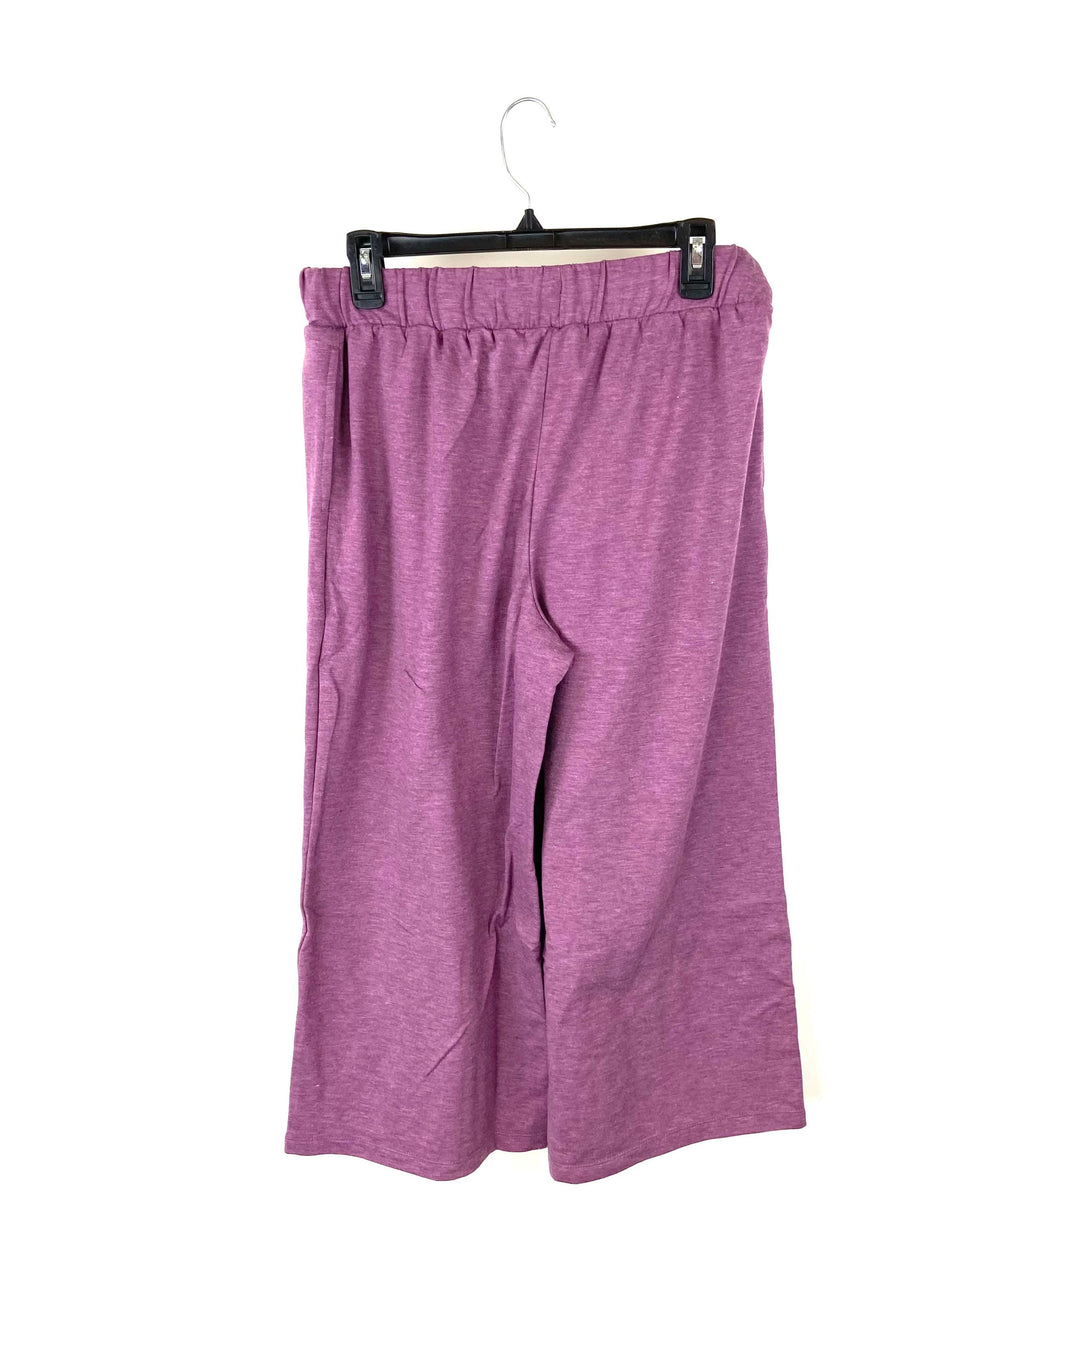 Purple Cropped Sweatpants - Small/Medium